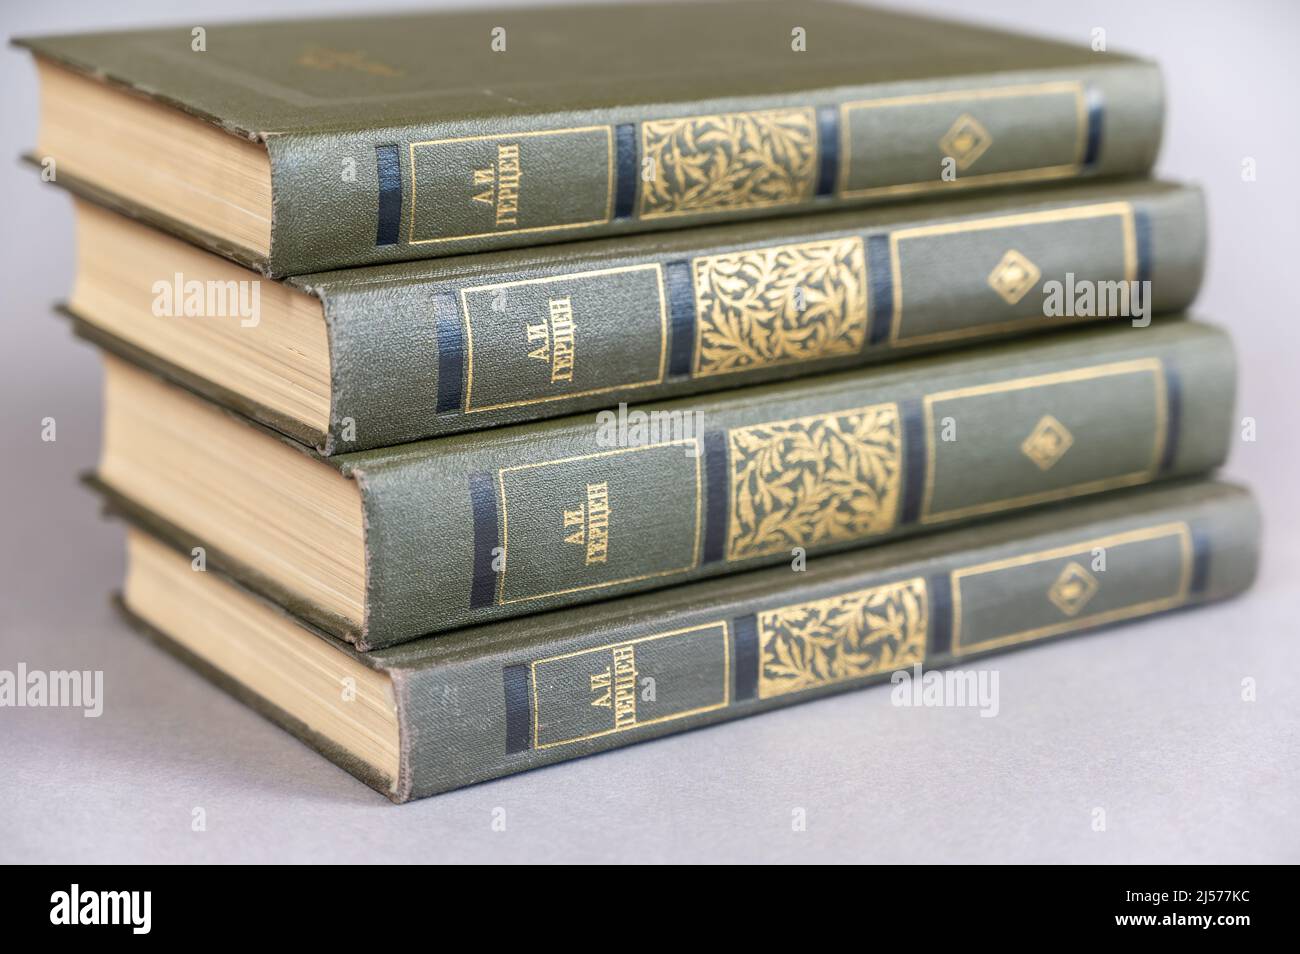 Four volumes of Herzen's literary works. Alexander Ivanovich Herzen was a Russian publicist, revolutionary, writer, teacher, and philosopher. Ukraine, Stock Photo